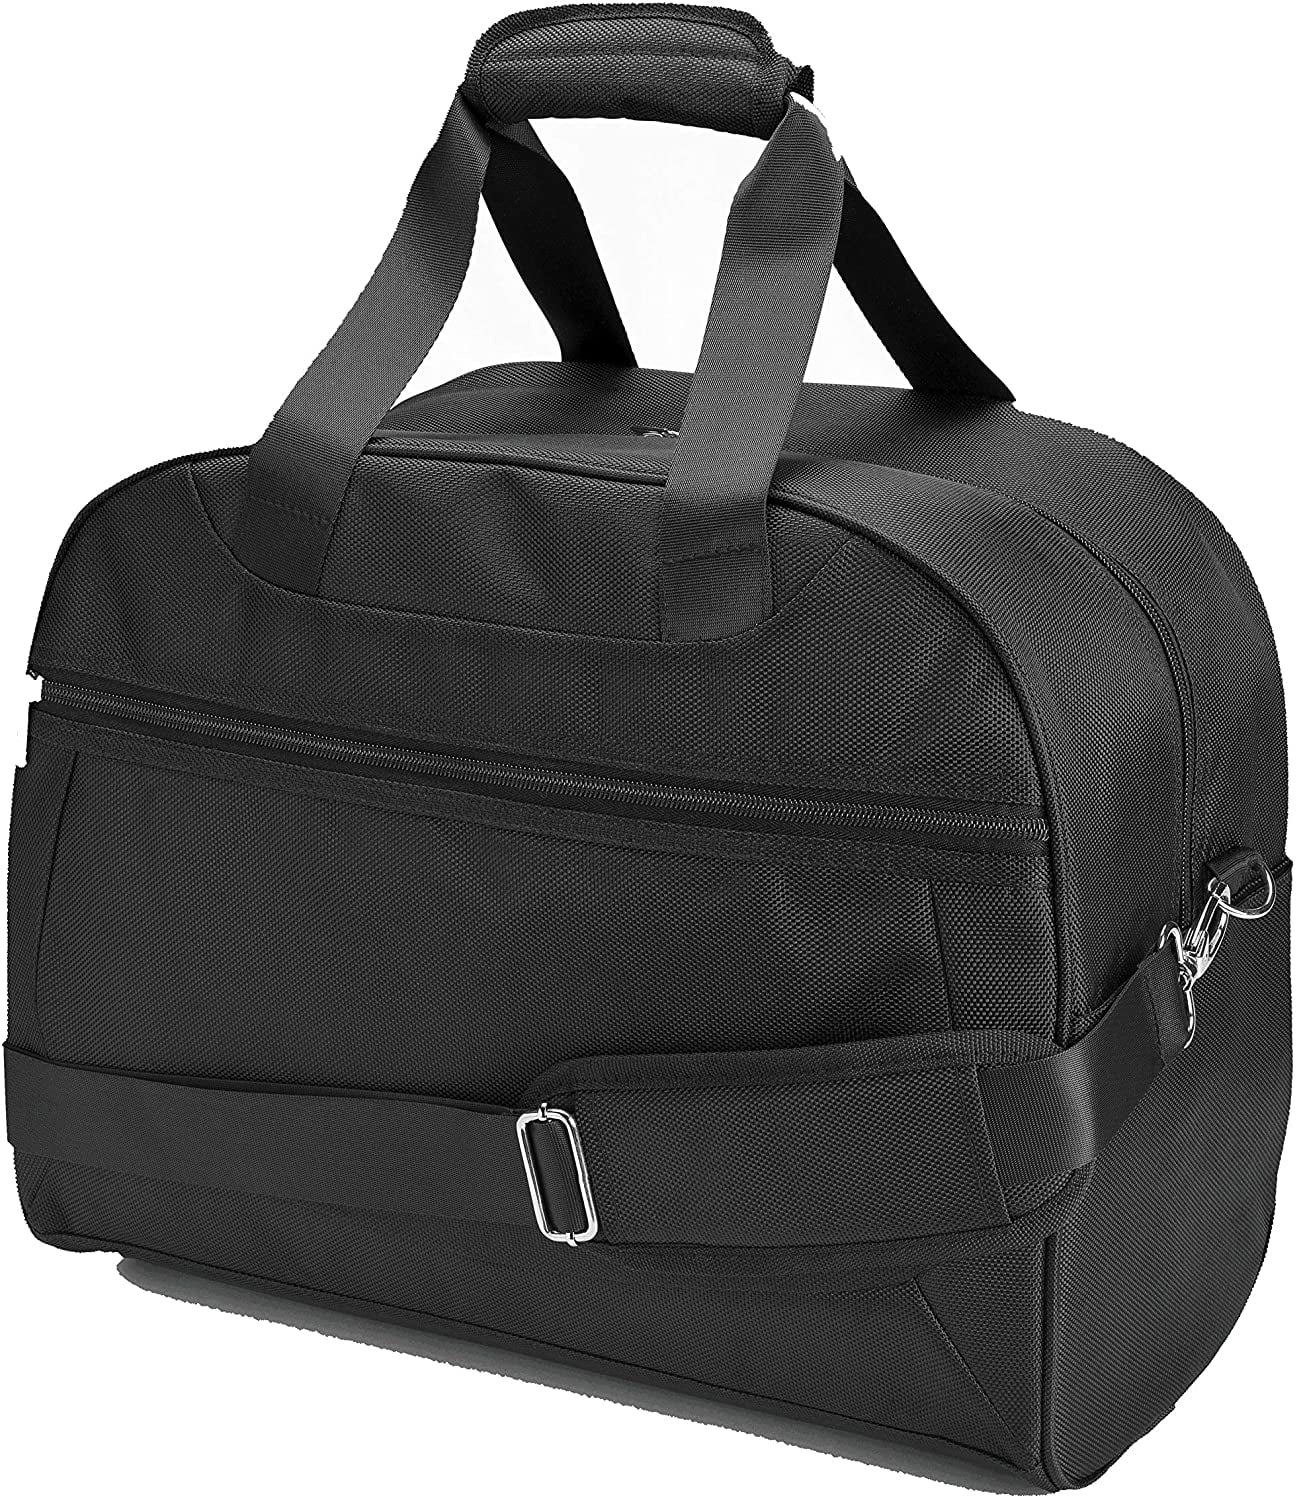 Southwest Airlines Black Nylon Zippered Shoulder Tote Drawstring Carry On Bag 